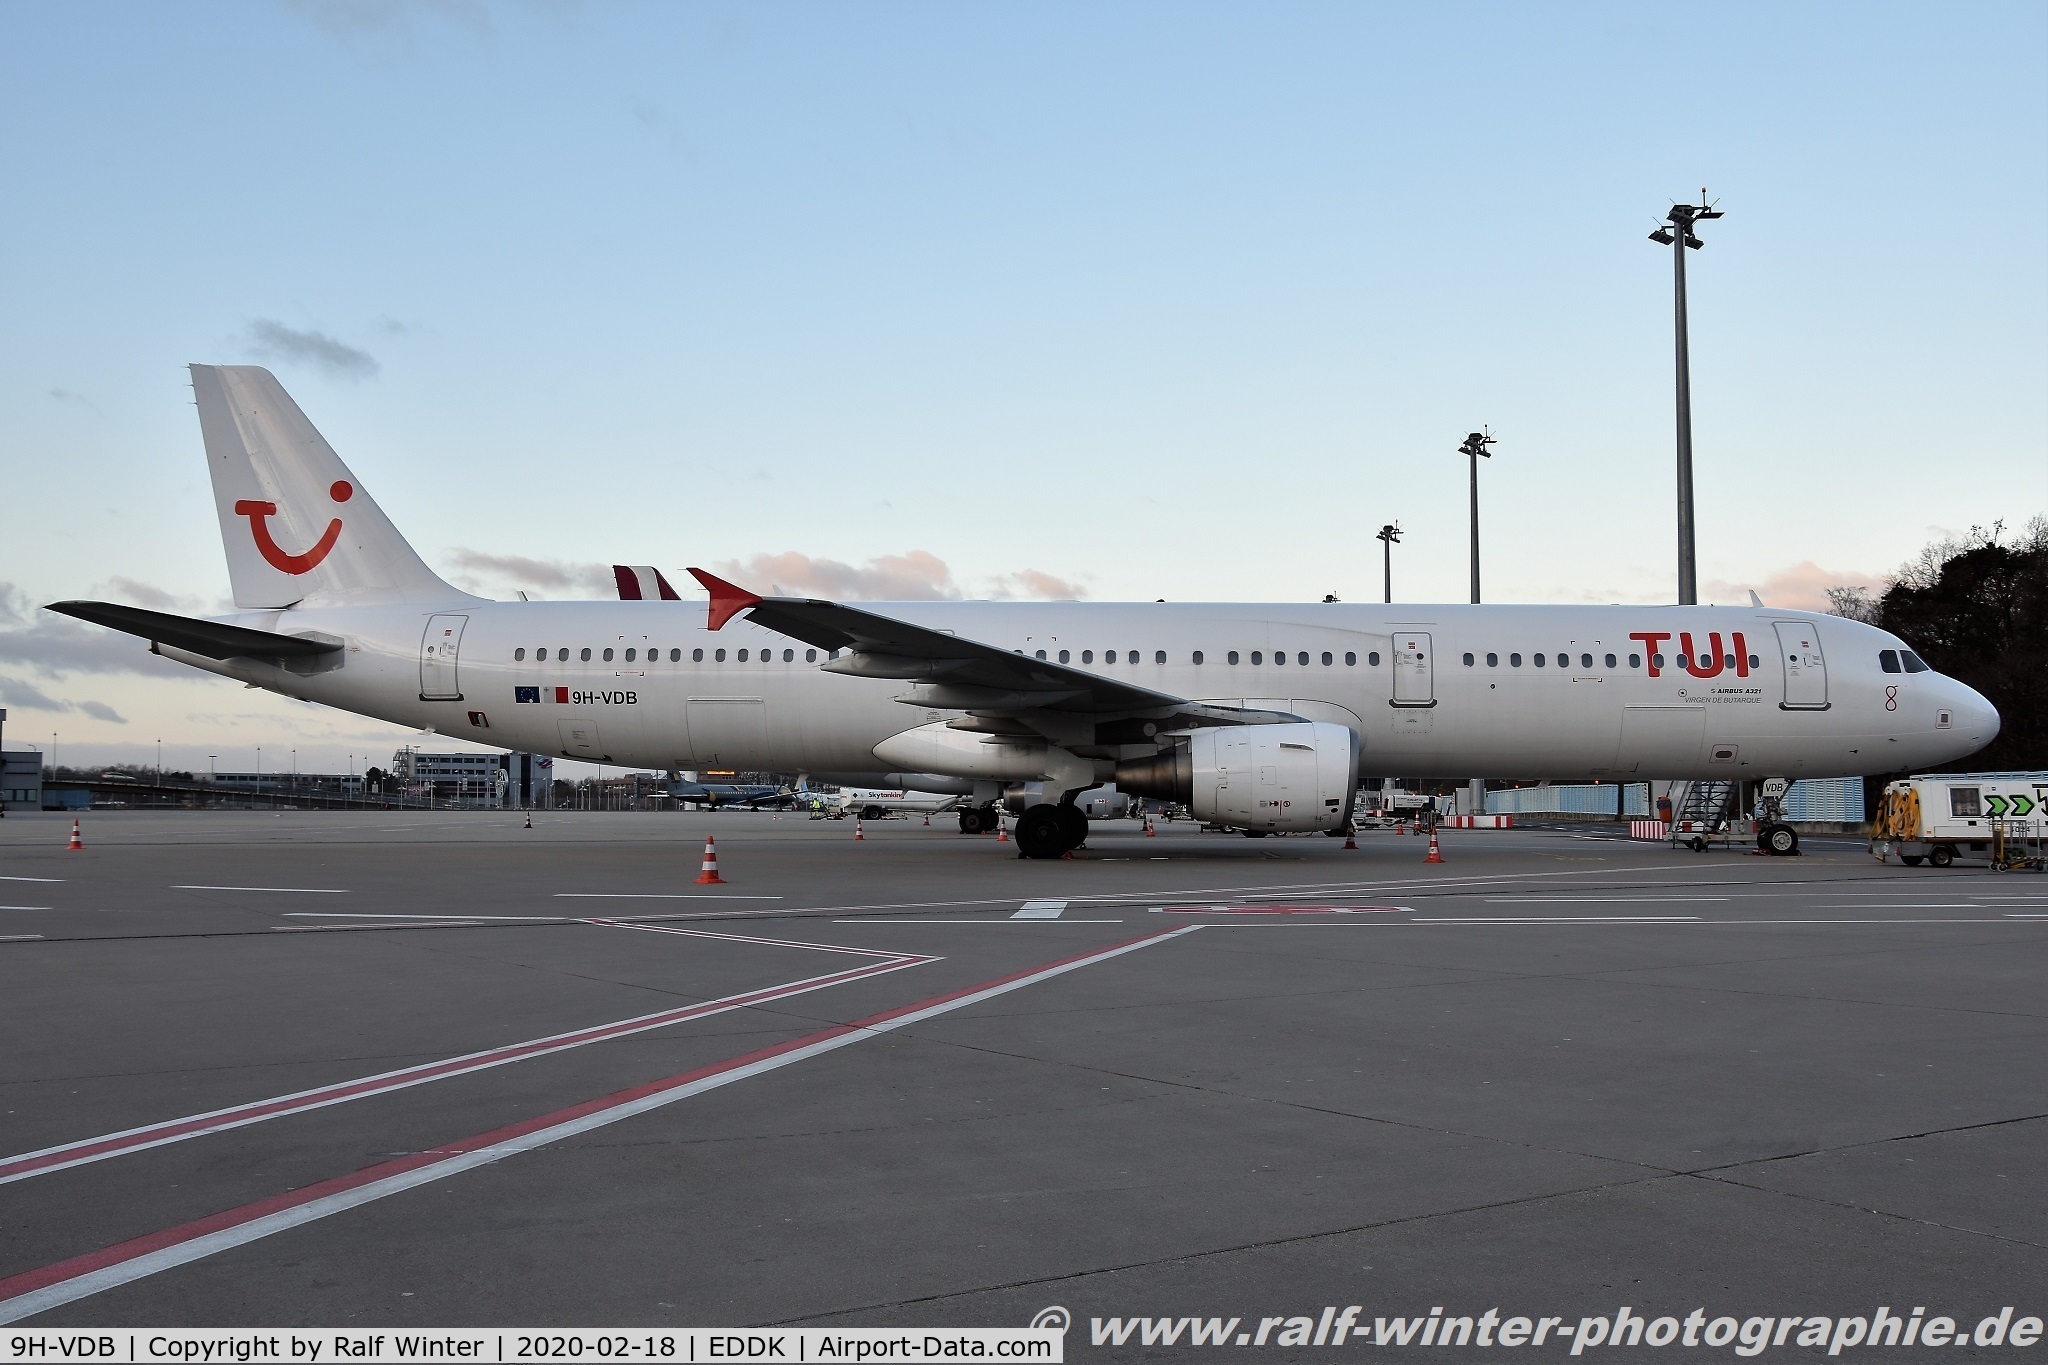 9H-VDB, 2001 Airbus A321-211 C/N 1607, Airbus A321-211 - X3 TUI TUIfly leased from Galistair Malta - 1607 - 9H-VDB - 18.02.2020 - CGN